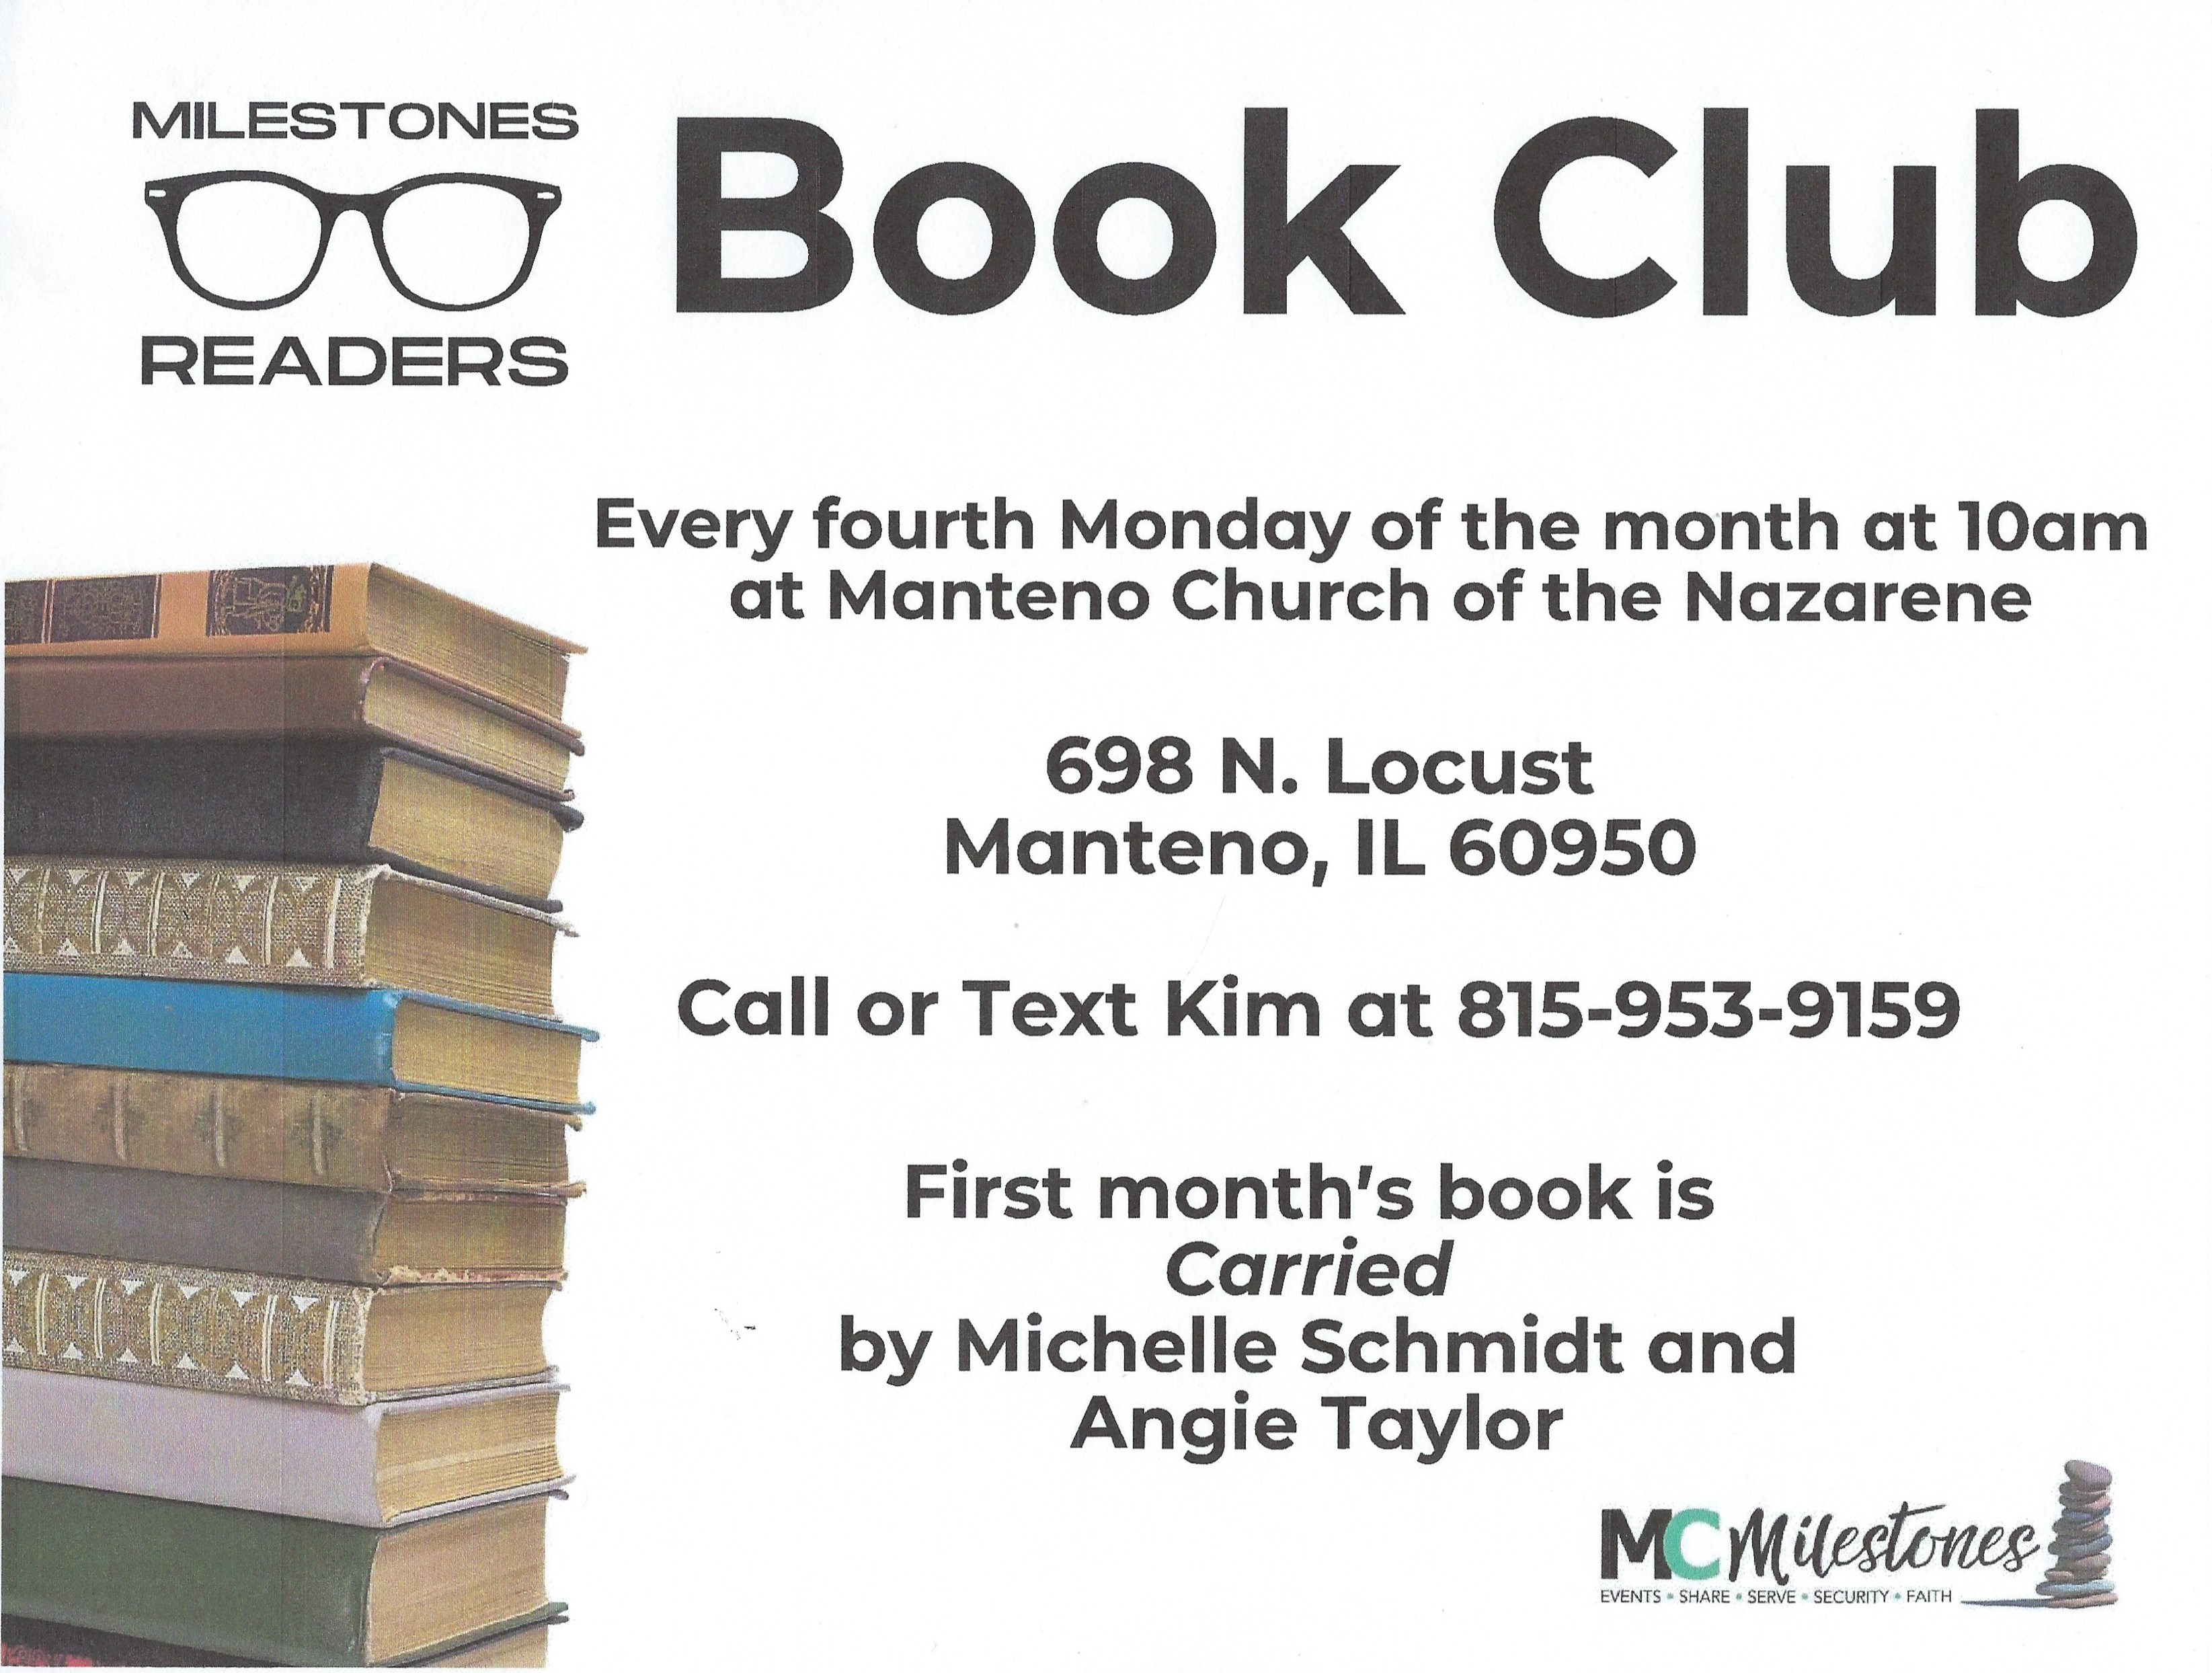 Milestones Readers Book Club sponsored by MC Milestones Senior Adult Initiative